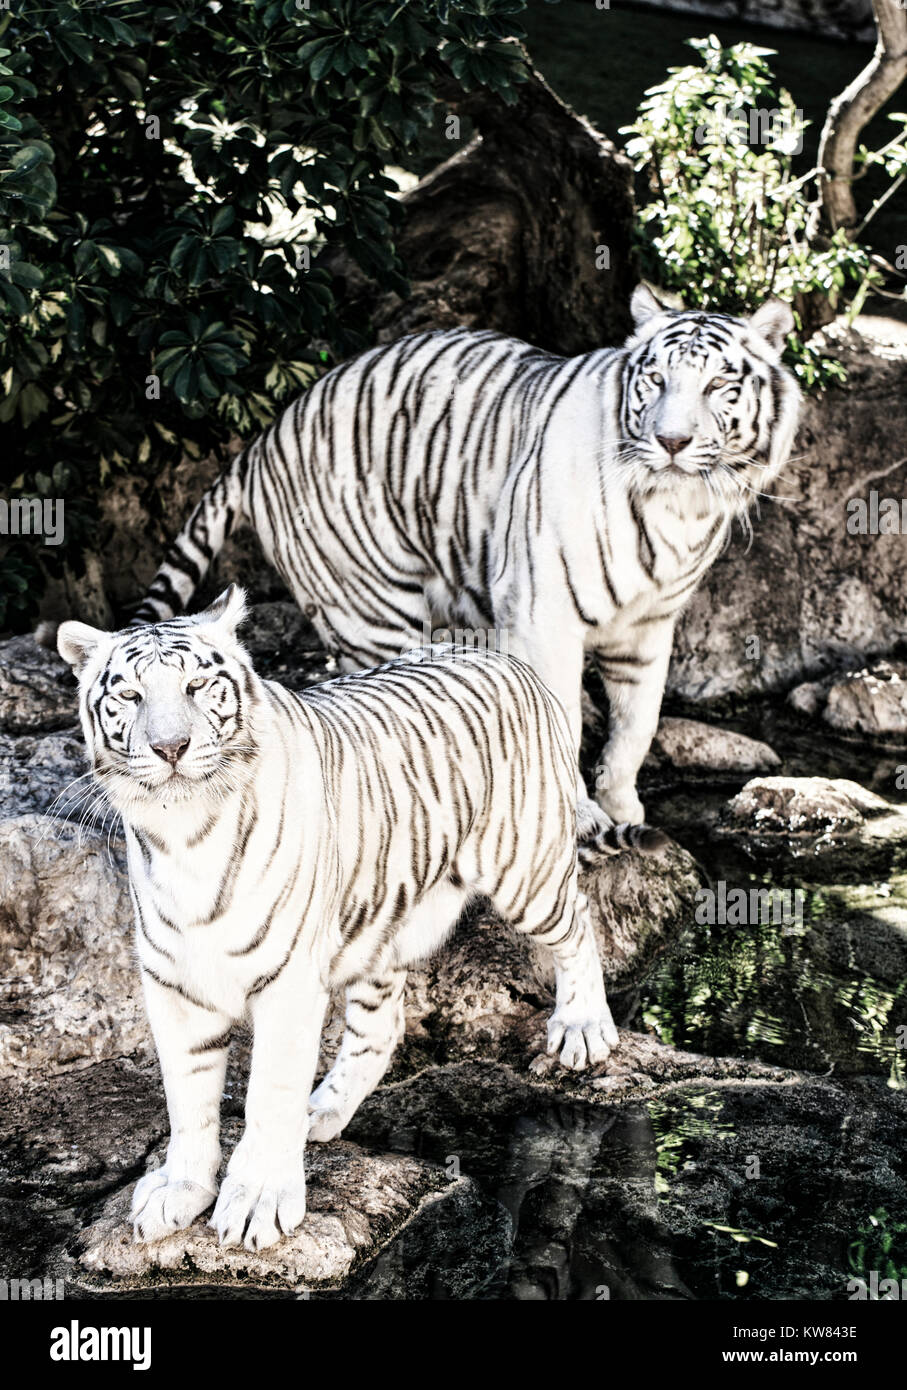 Tigres blancs dans un zoo de l'Espagne Banque D'Images